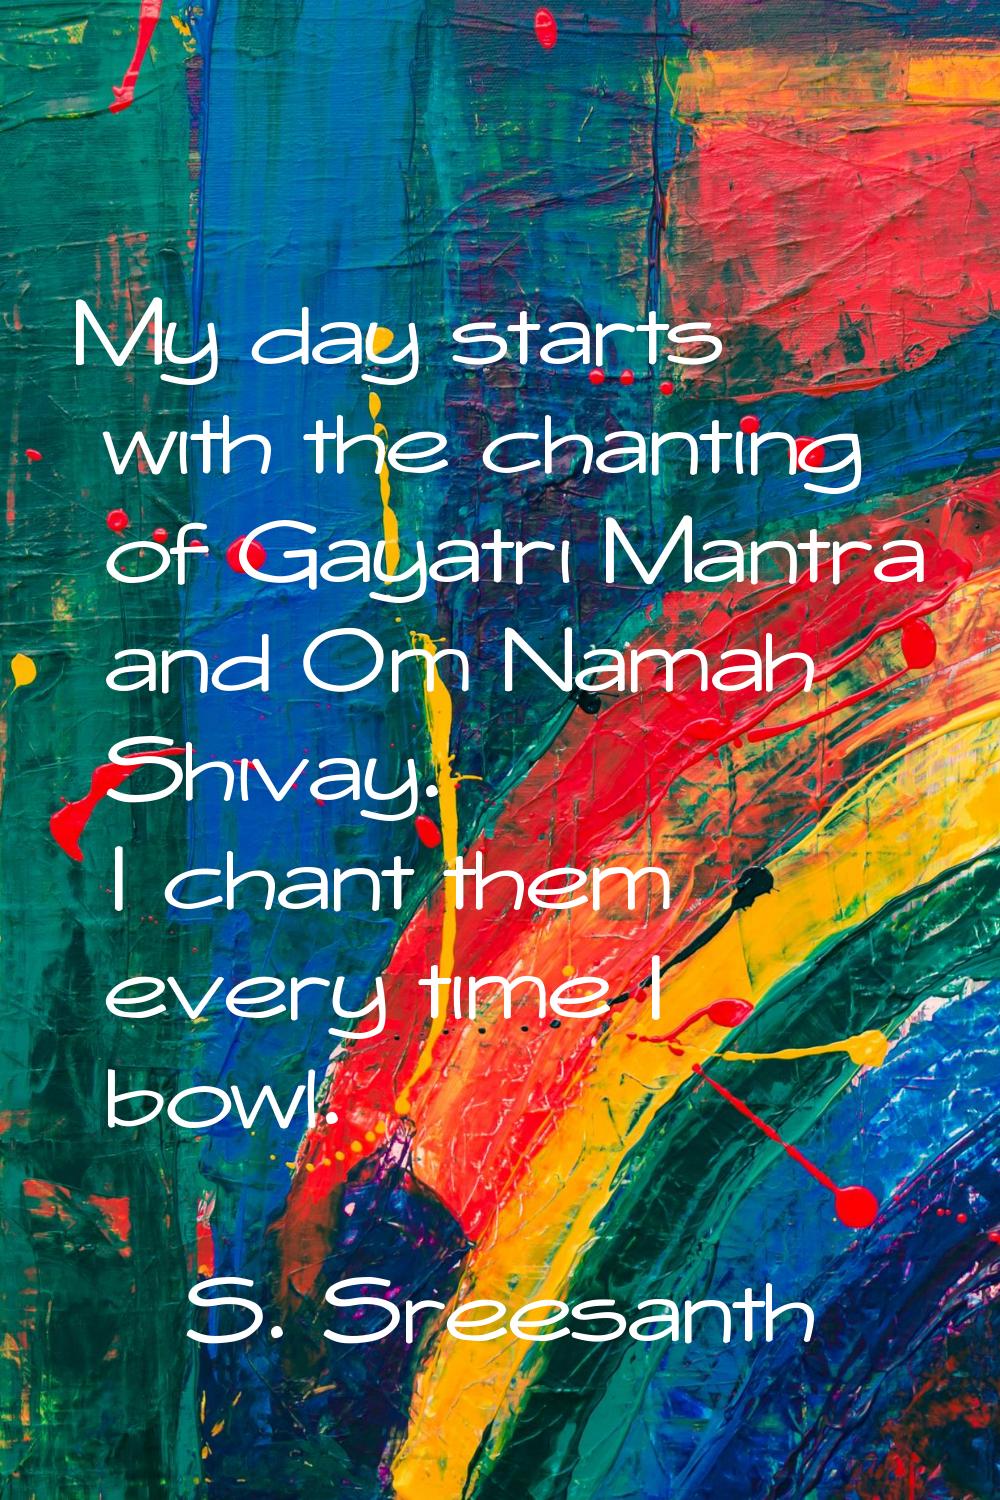 My day starts with the chanting of Gayatri Mantra and Om Namah Shivay. I chant them every time I bo